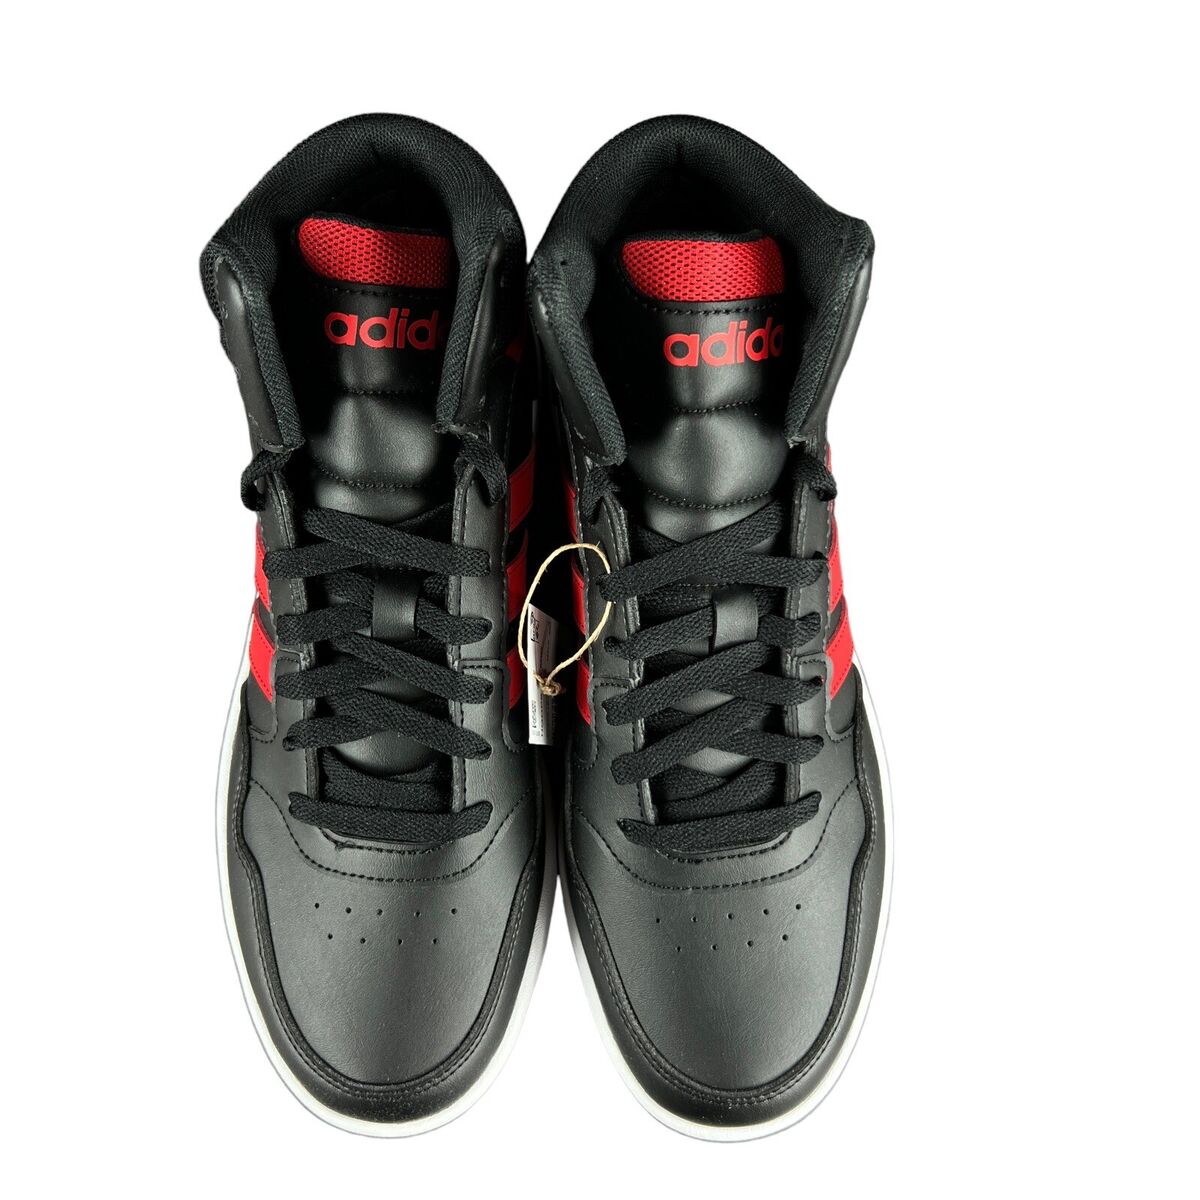 Adidas Hoops eBay Sizes Mid Scarlet White | ID9835 Men\'s Black Shoes Better 7.5-13 3.0